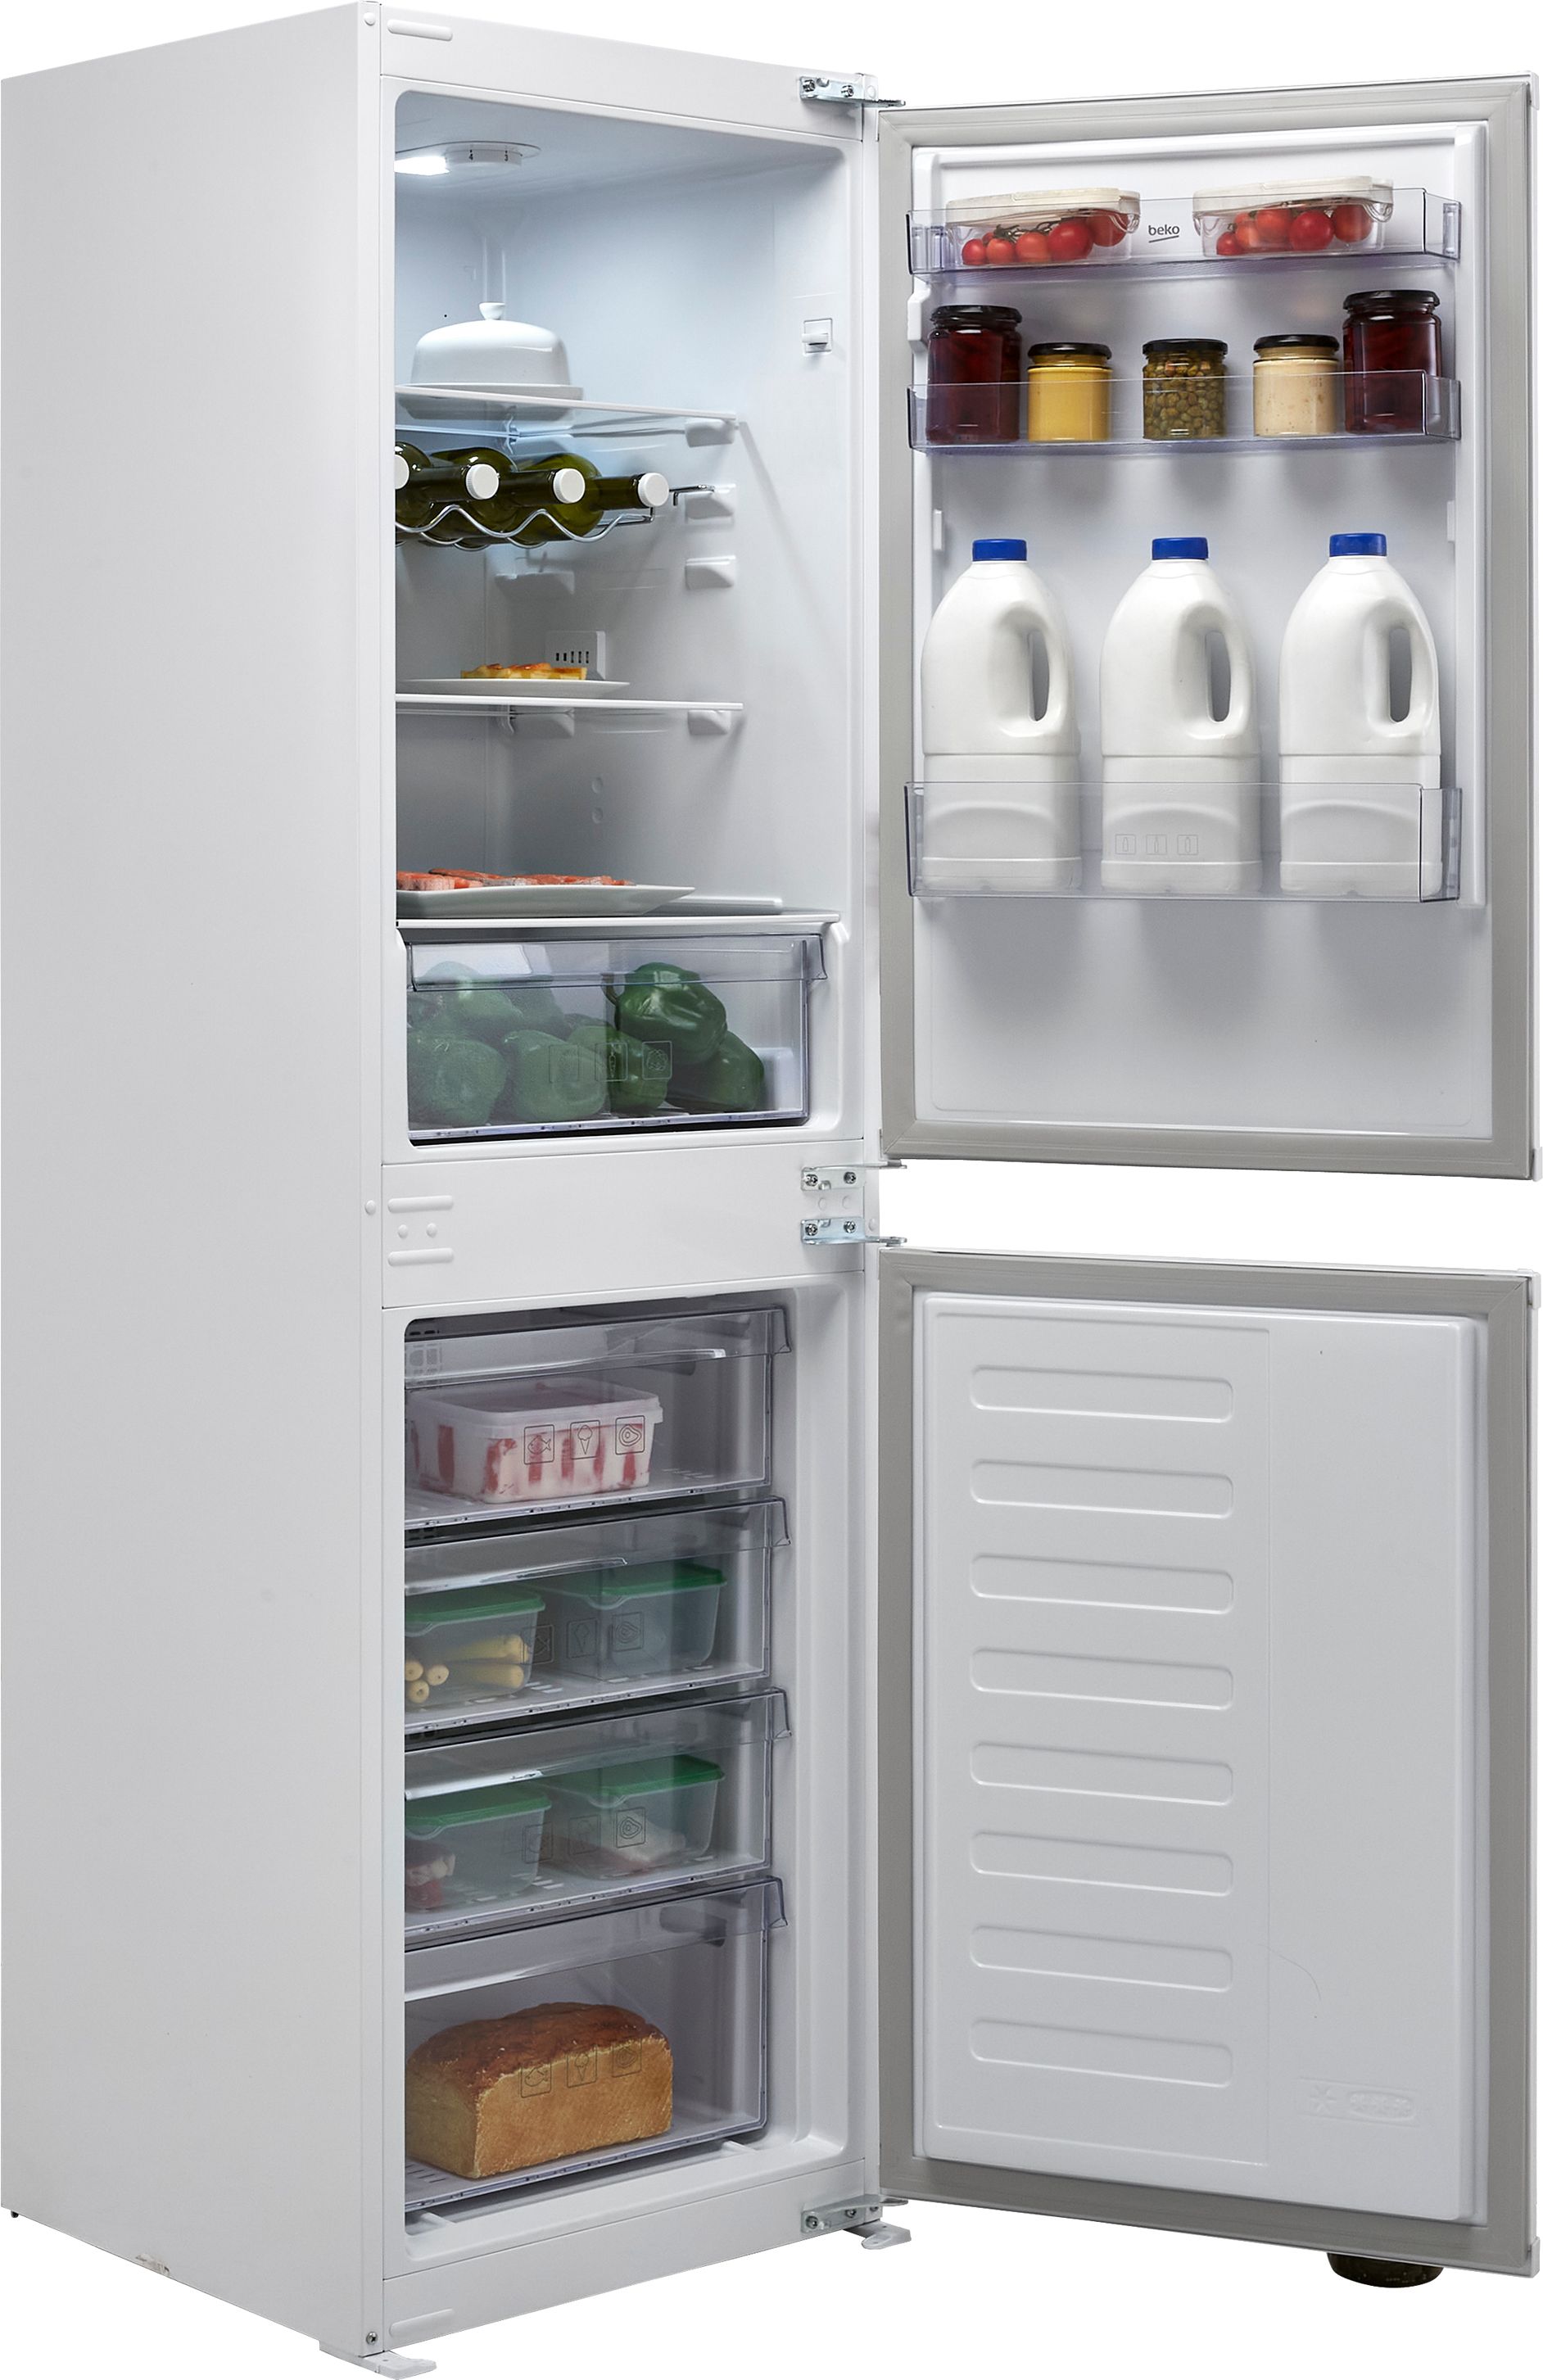 Beko BCB5050F 50:50 Integrated Frost free Fridge freezer - White